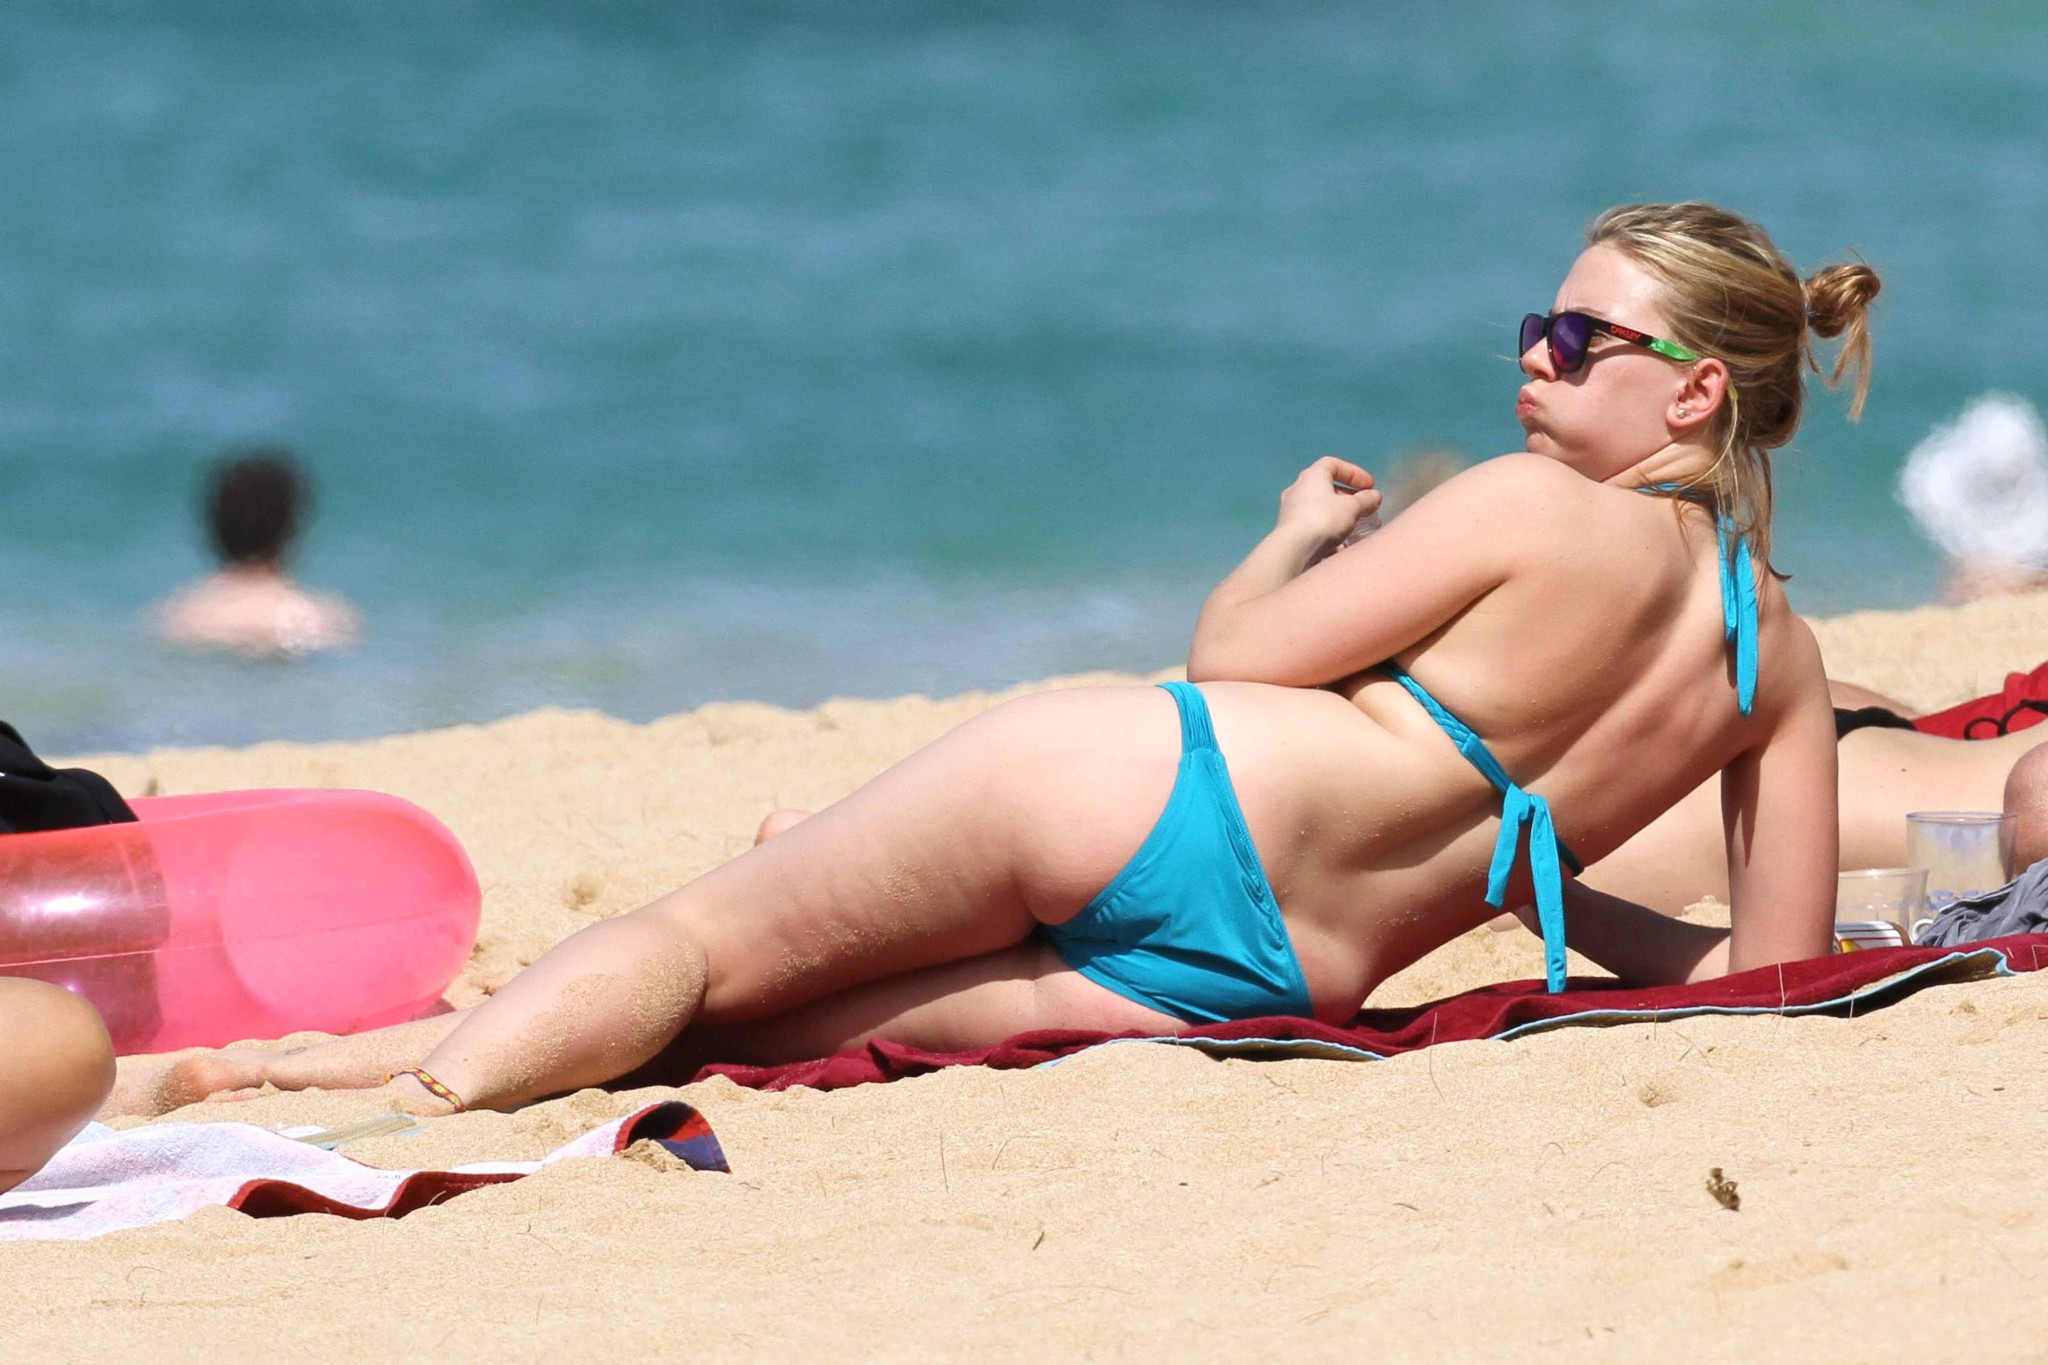 Scarlett johansson portant un bikini bleu ciel sur une plage hawaïenne.
 #75274377